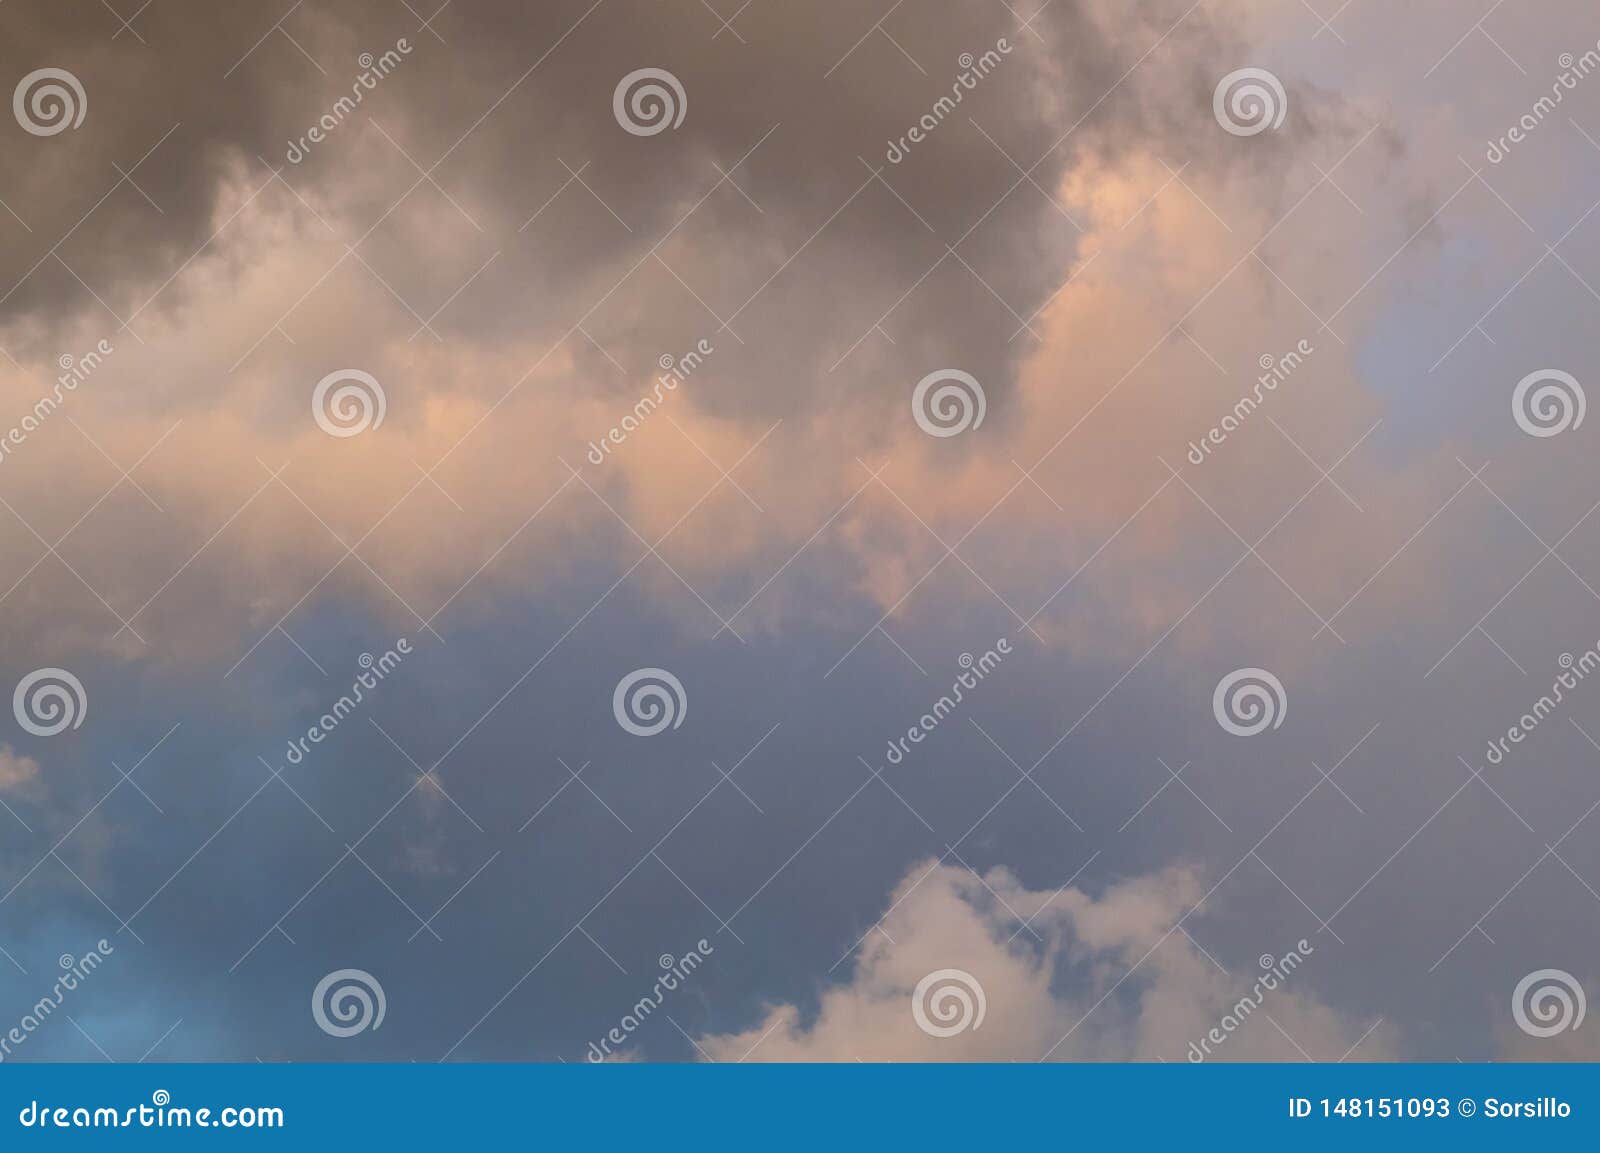 storm clouds in sky at sunset over bonita springs florida